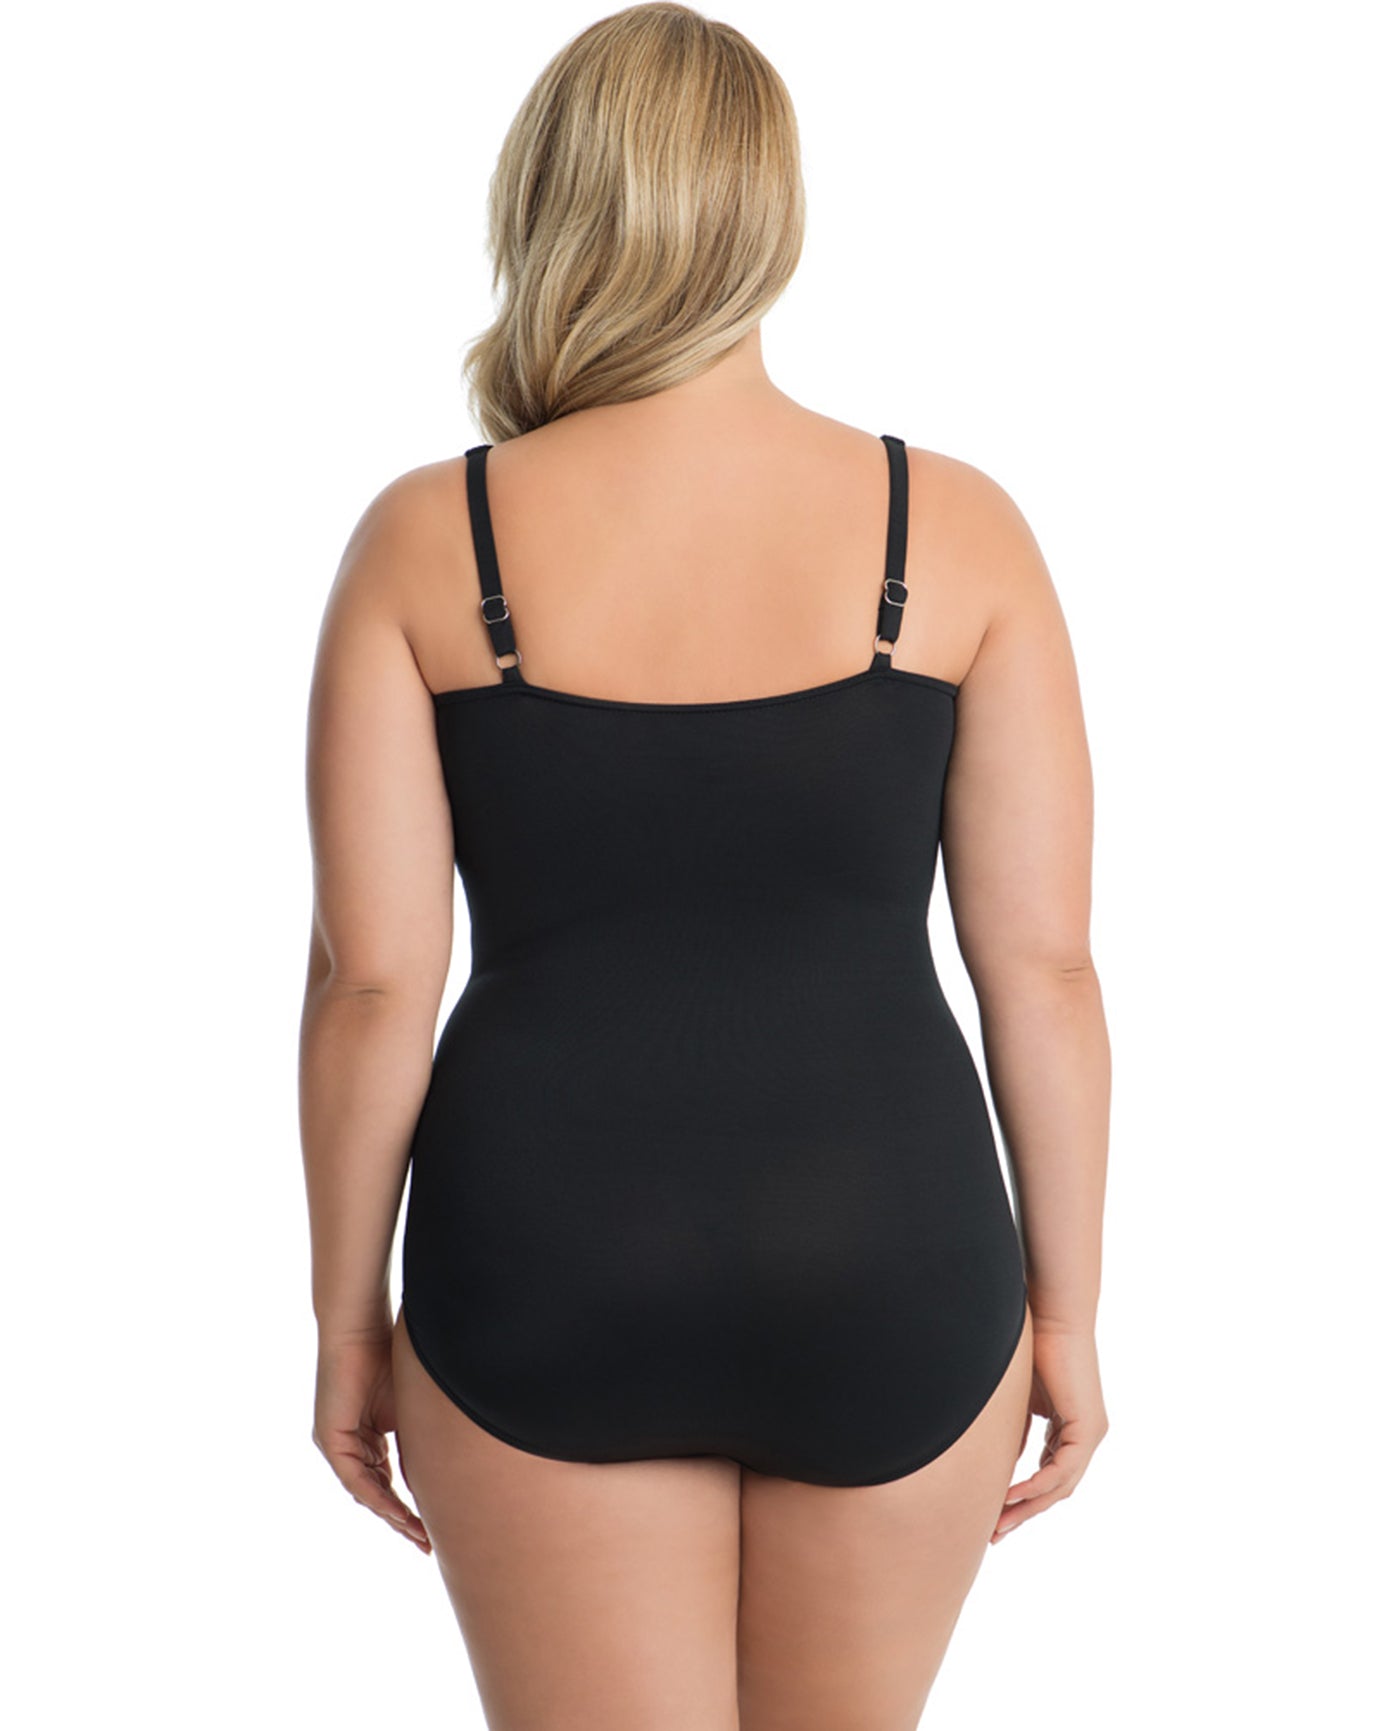 Back View Of Miraclesuit Black Plus Size Sanibel Surplice Underwire One Piece Swimsuit | MIR Black